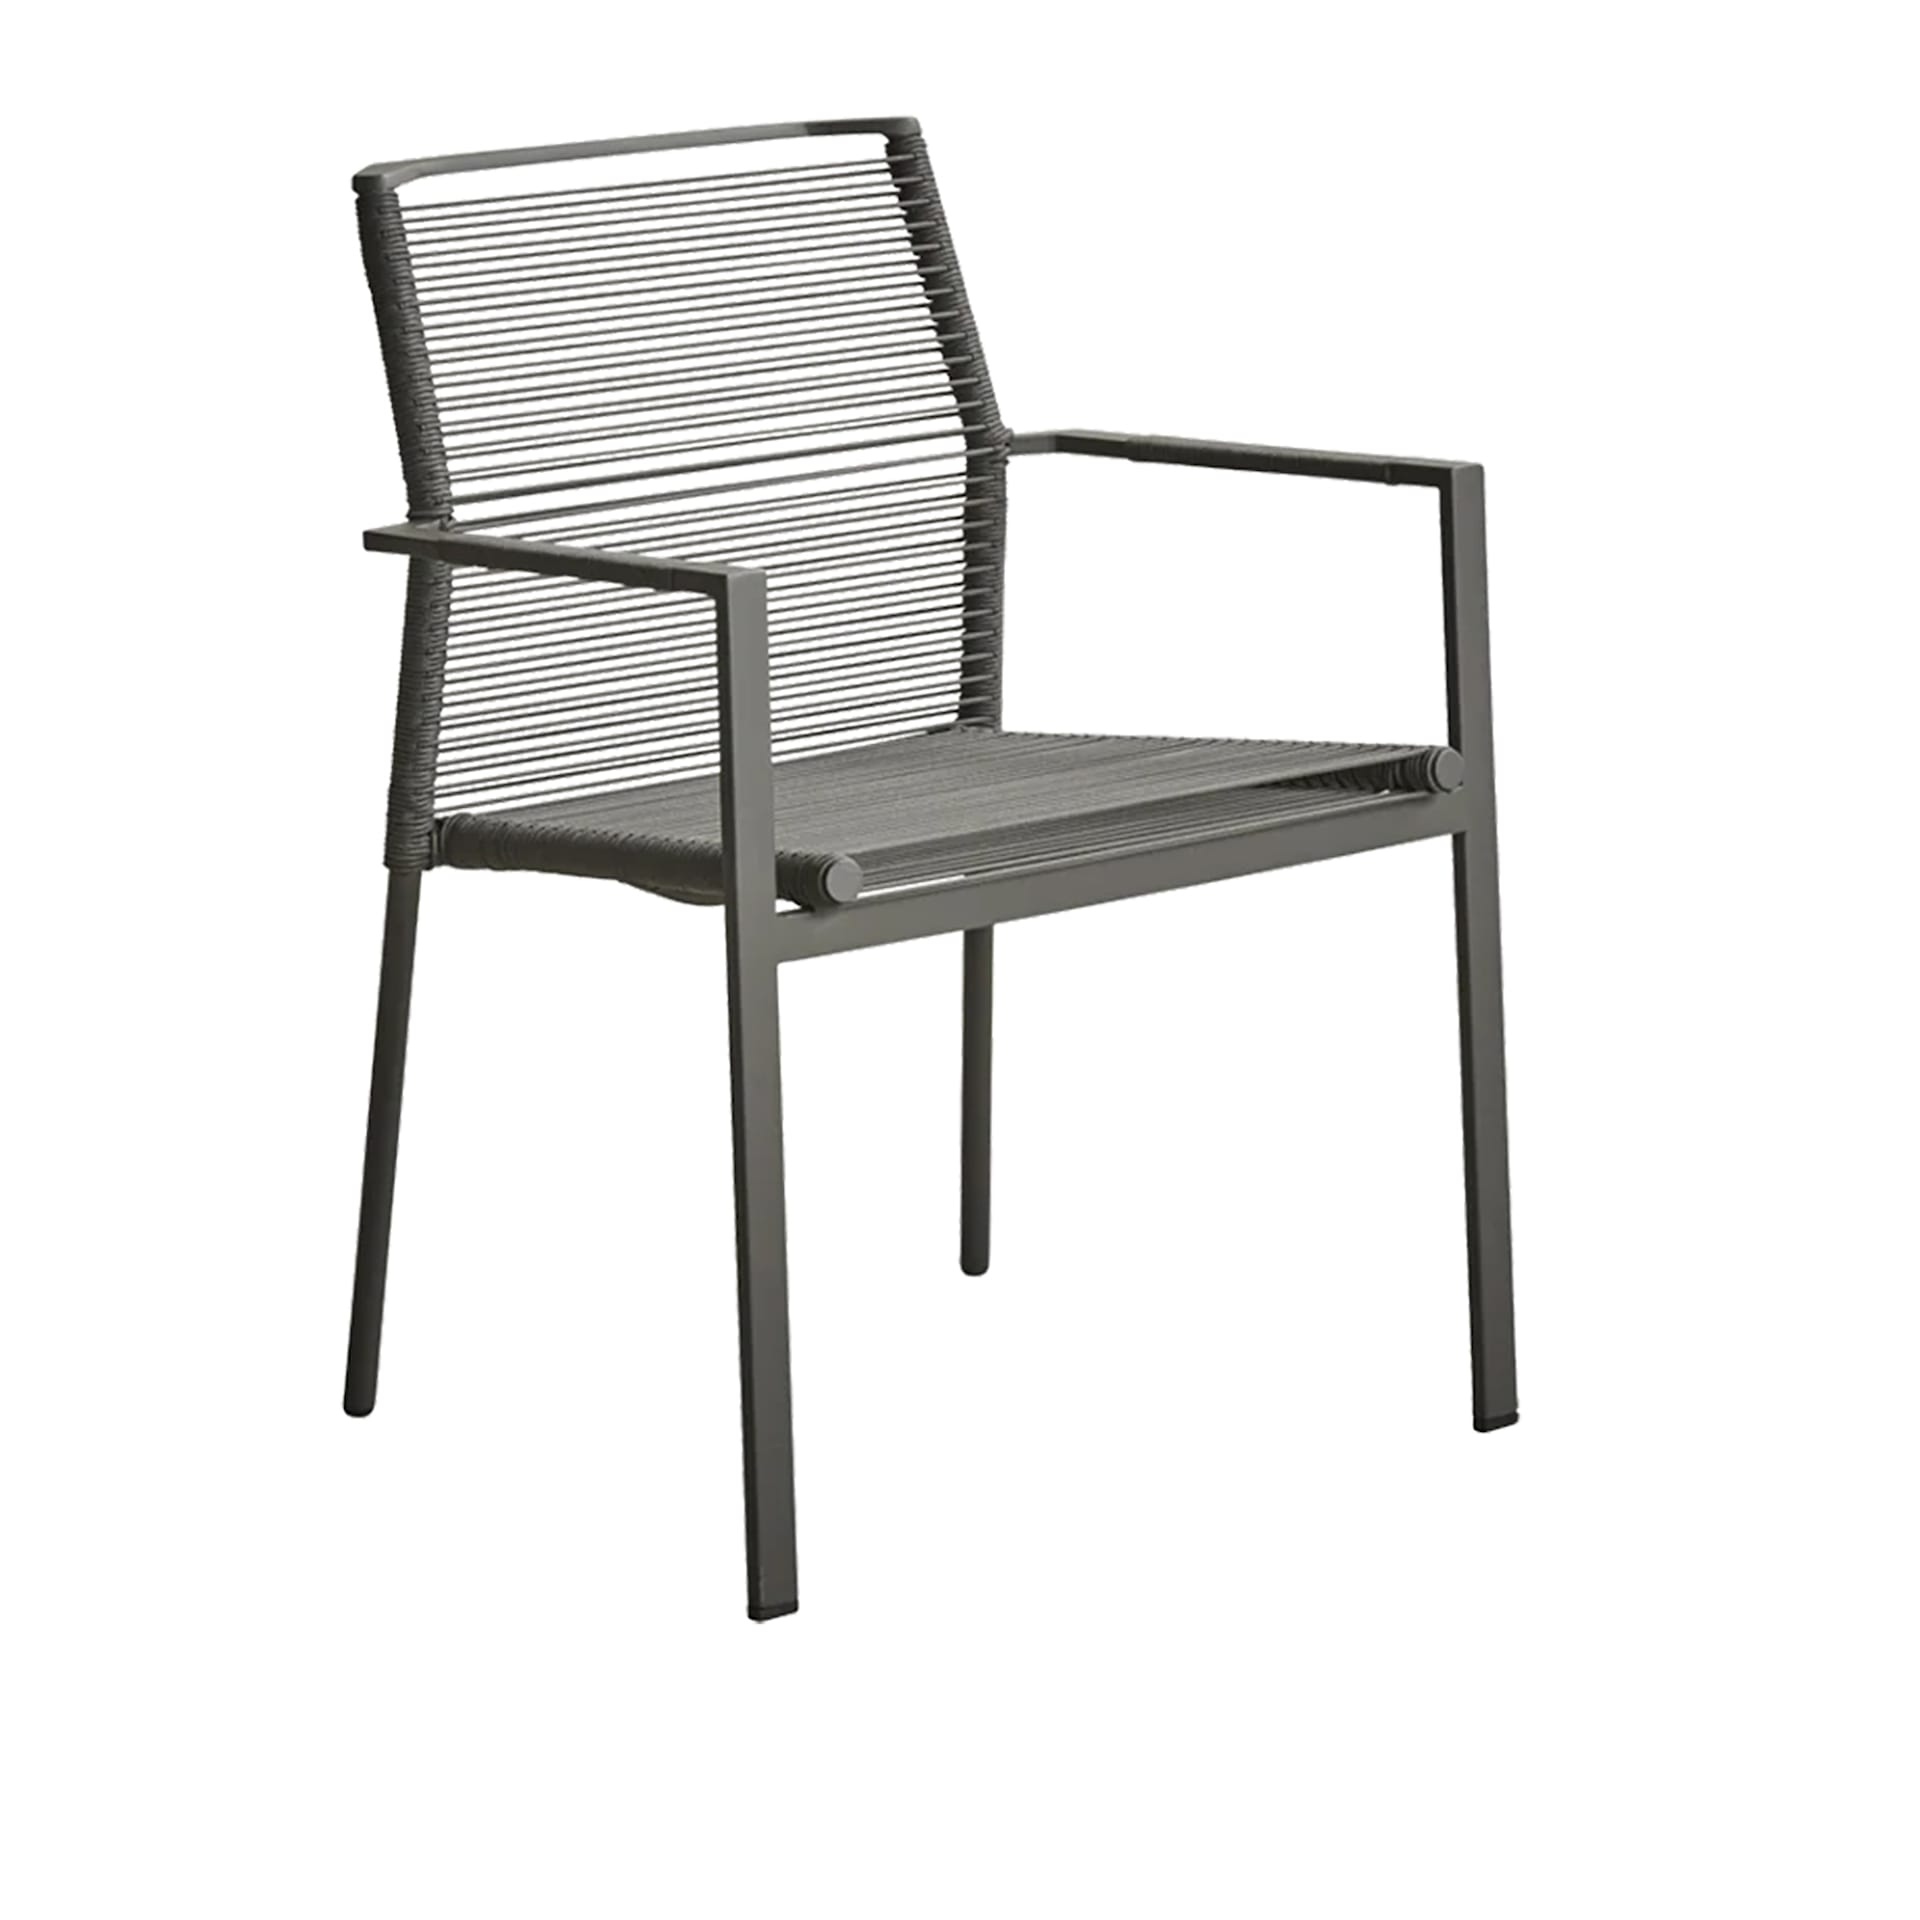 Edge Garden Chair With Armrest - Cane-Line - NO GA